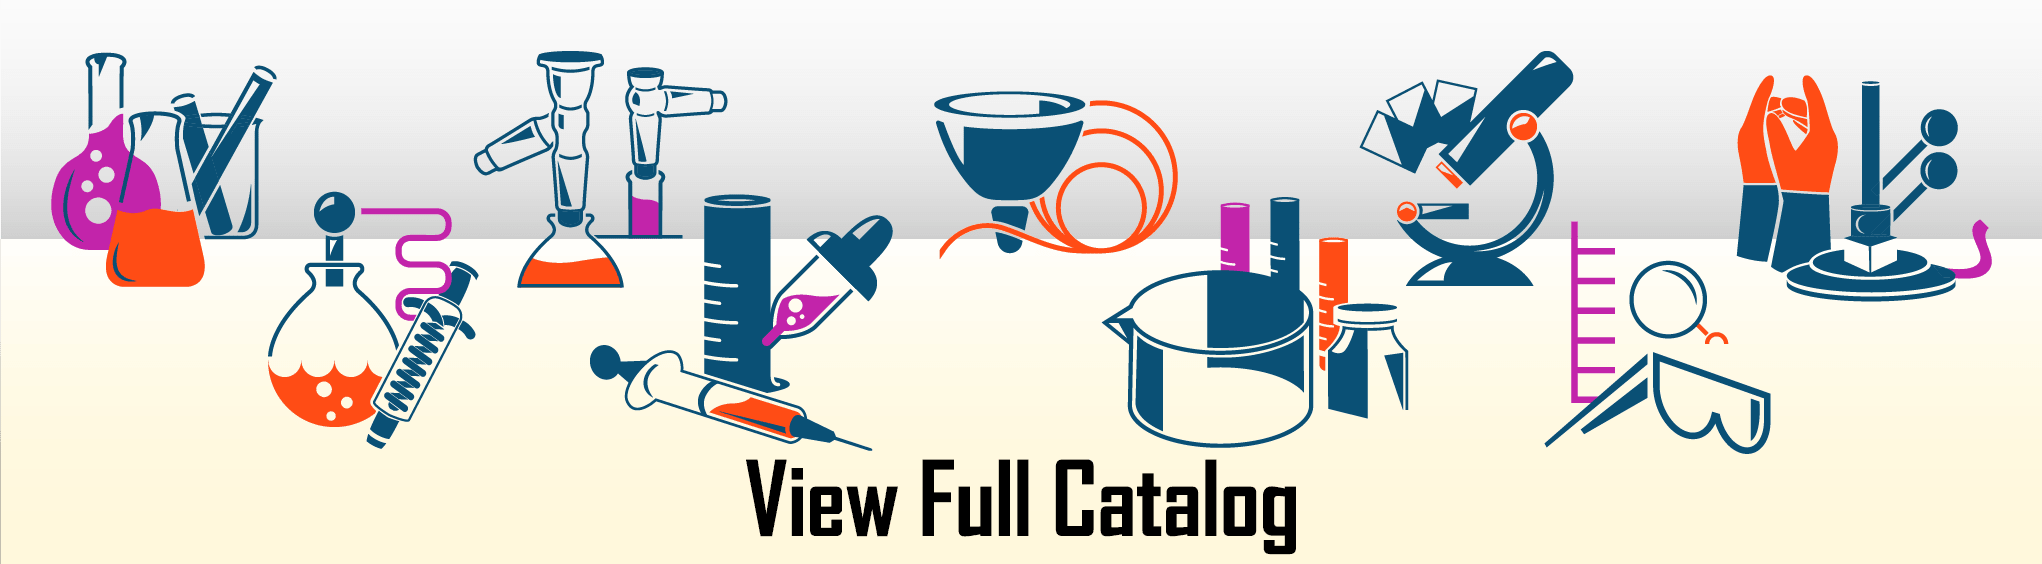 Full Catalog Lab Equipment and Glass On LabGeek